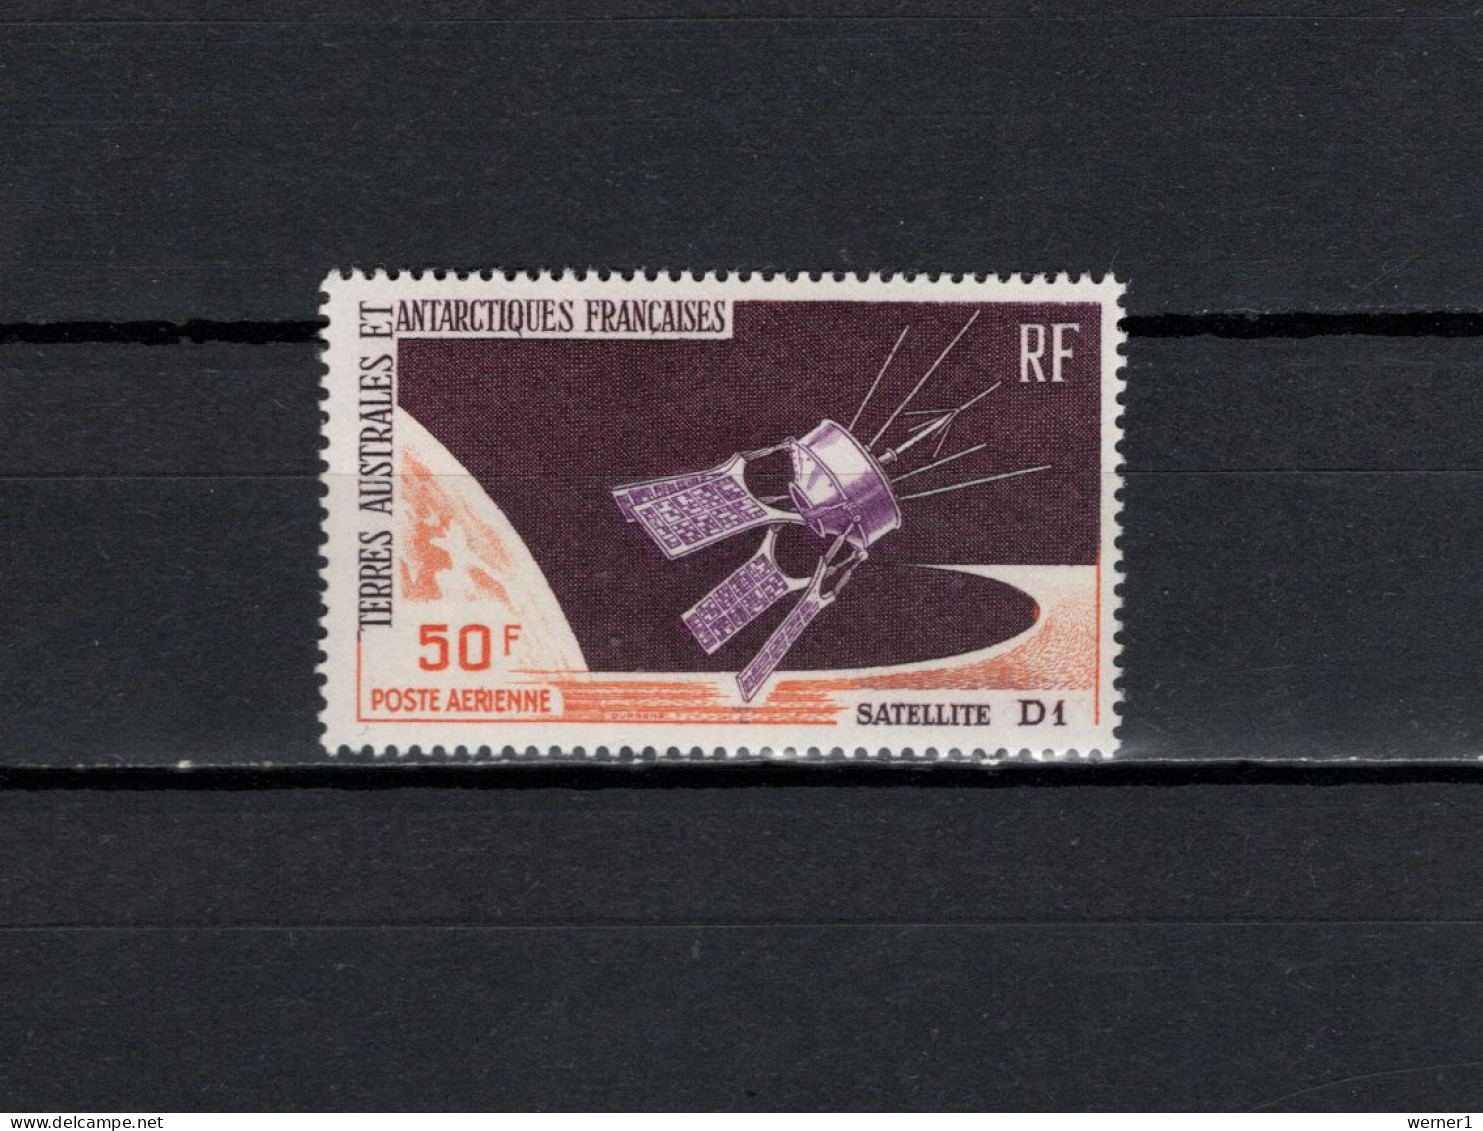 FSAT French Antarctic Territory 1966 Space, D1 Satellite Stamp MNH - Oceania